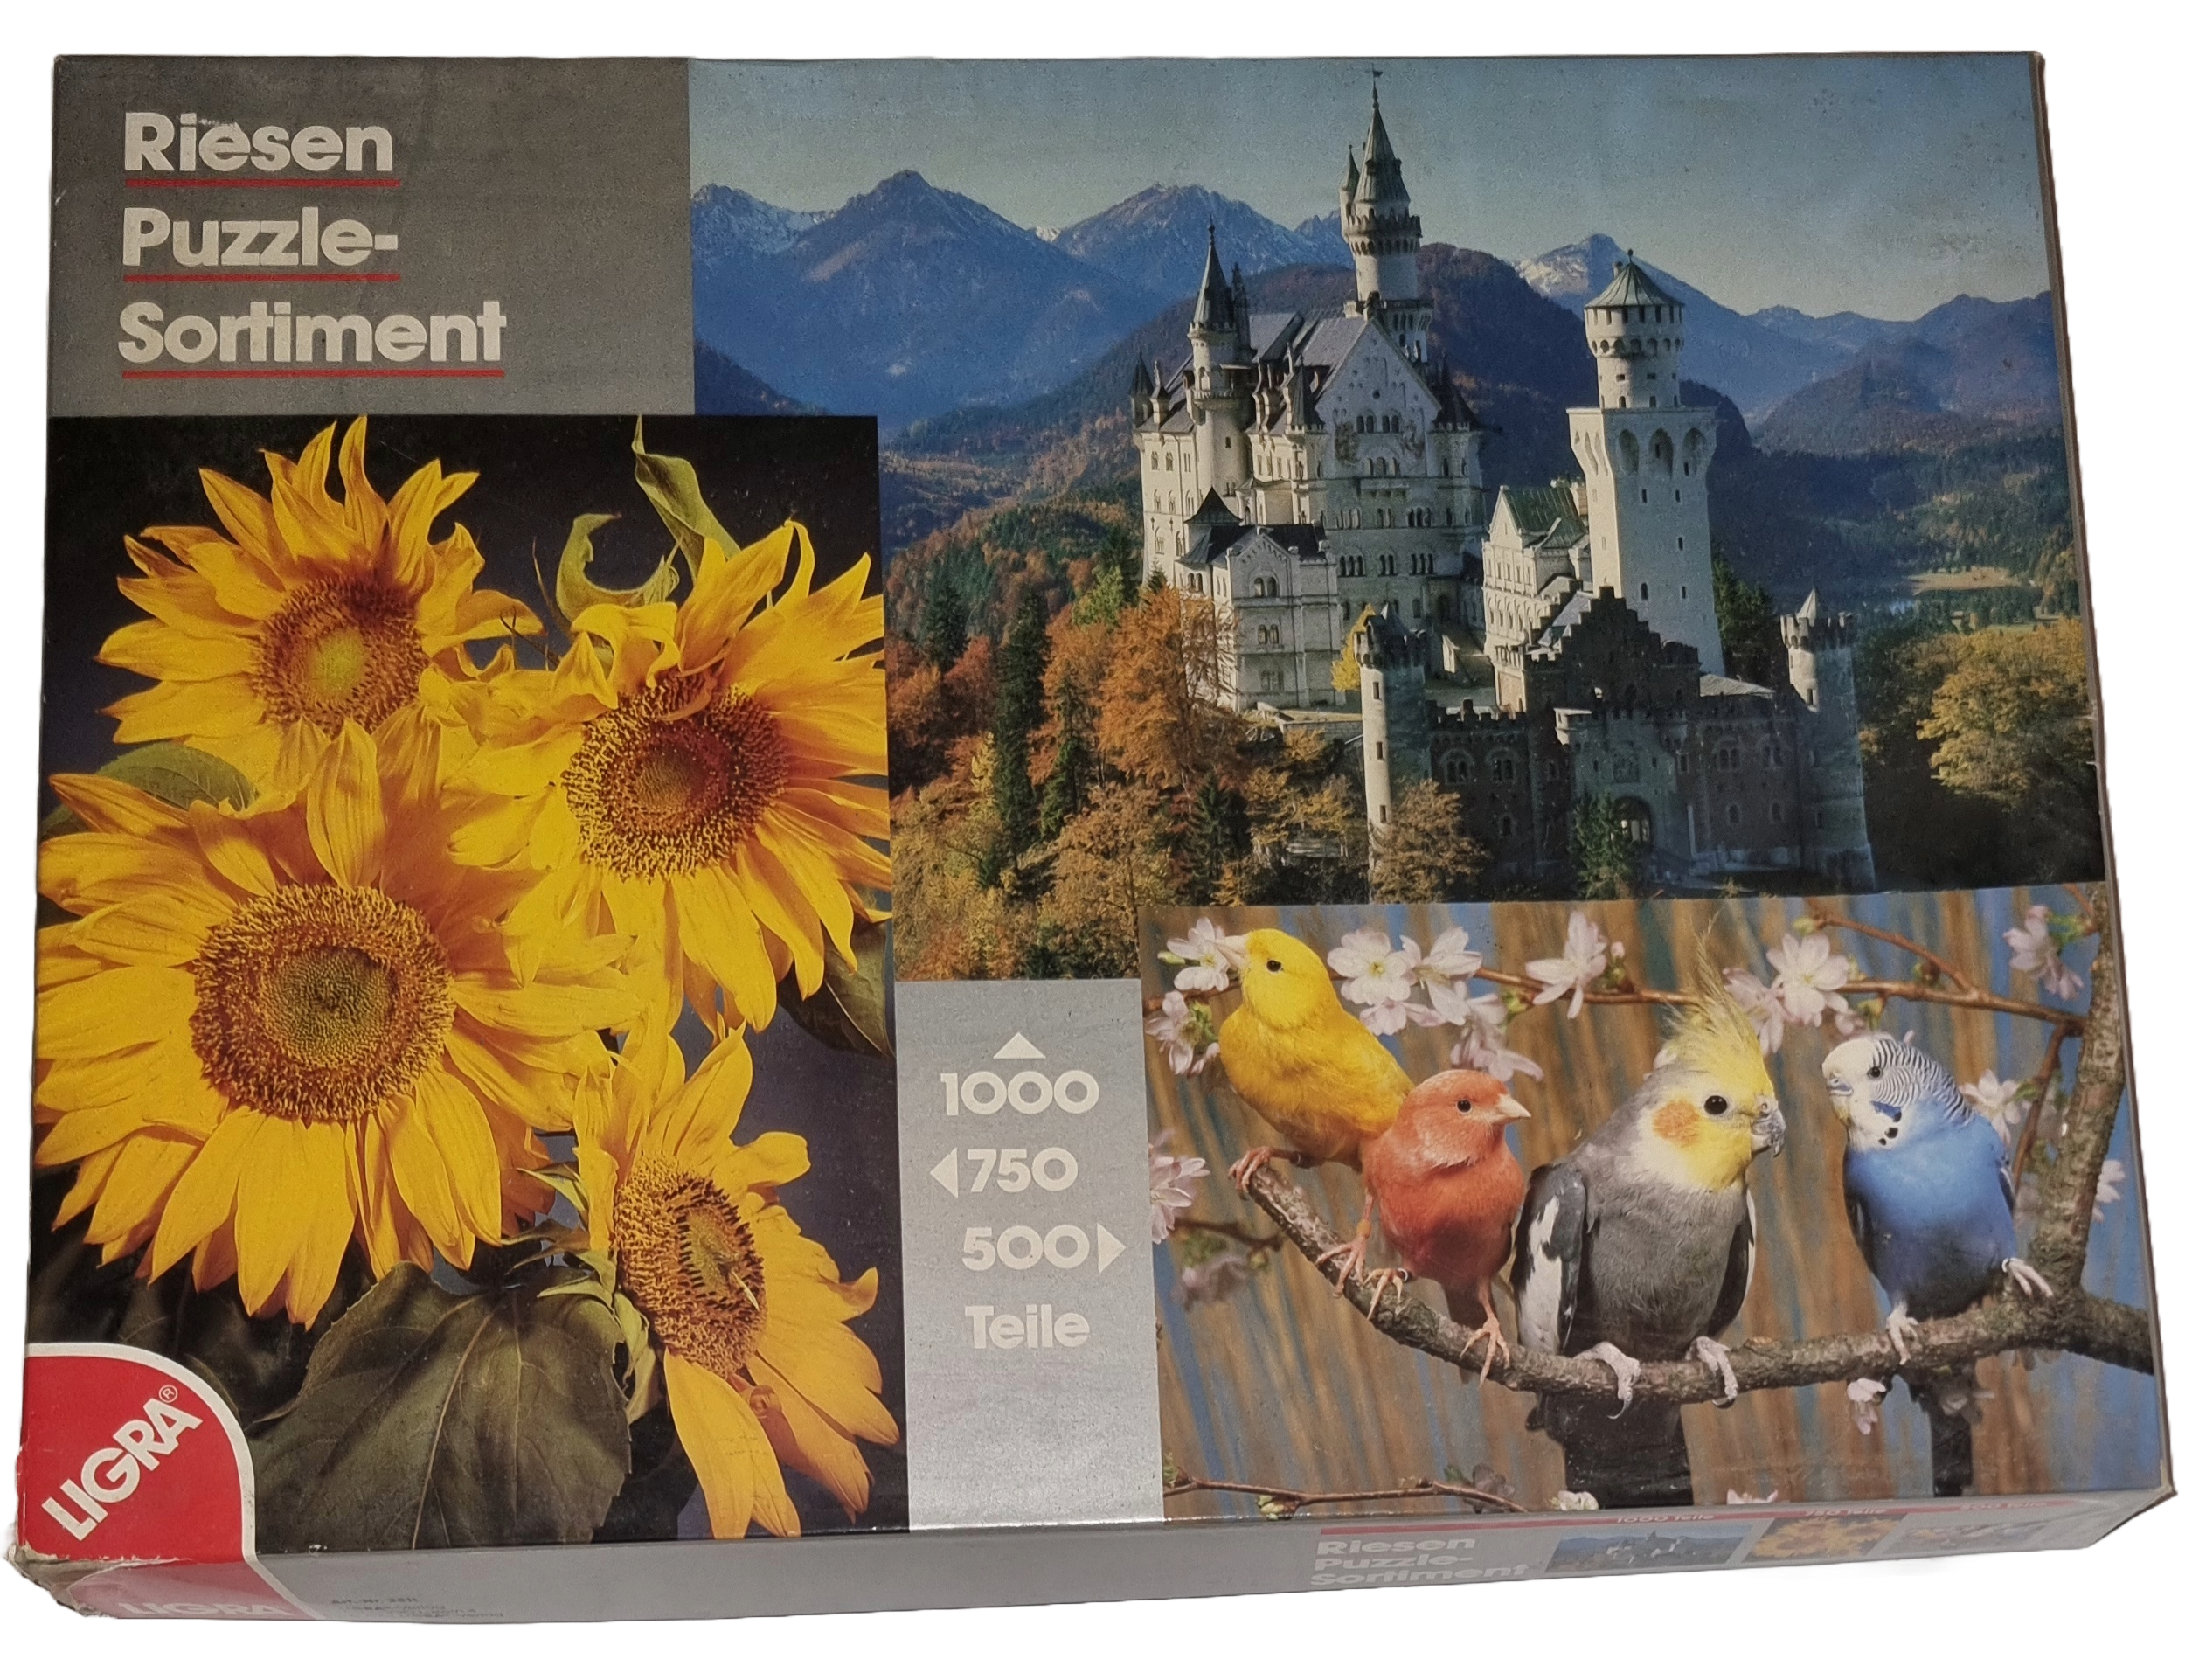 Ligra Riesen Puzzle-Sortiment 1000 Teile, 750 Teile, 500 Teile